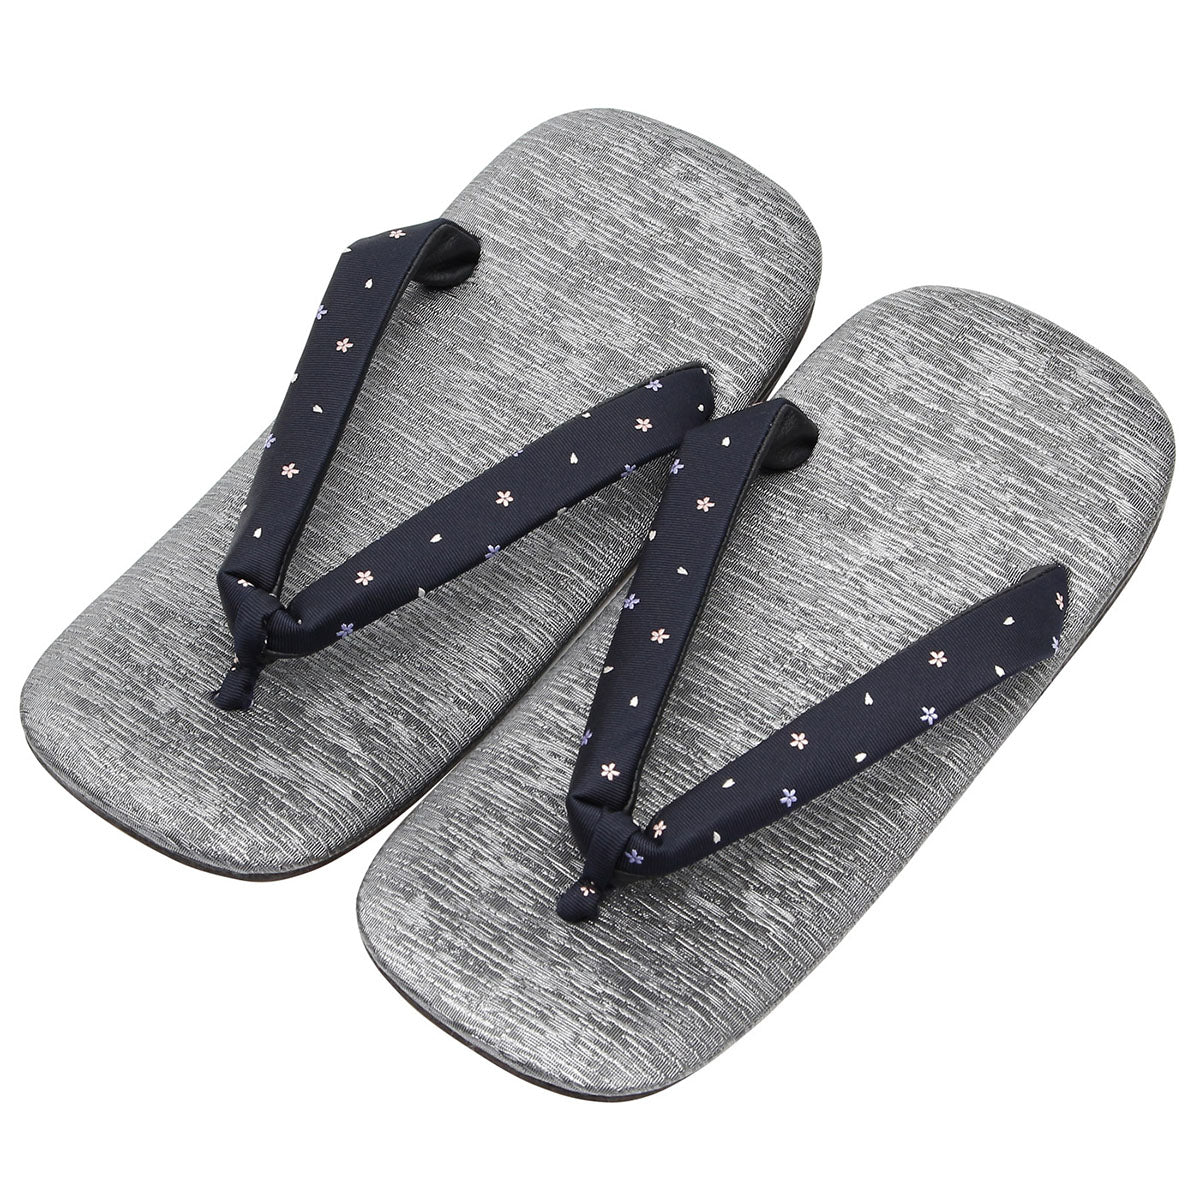 Men's Japanese Leather Soled Geta & Zori Sandals flip-flops Handmade with Silk Thongs -15. Sakura FORTUNA Tokyo